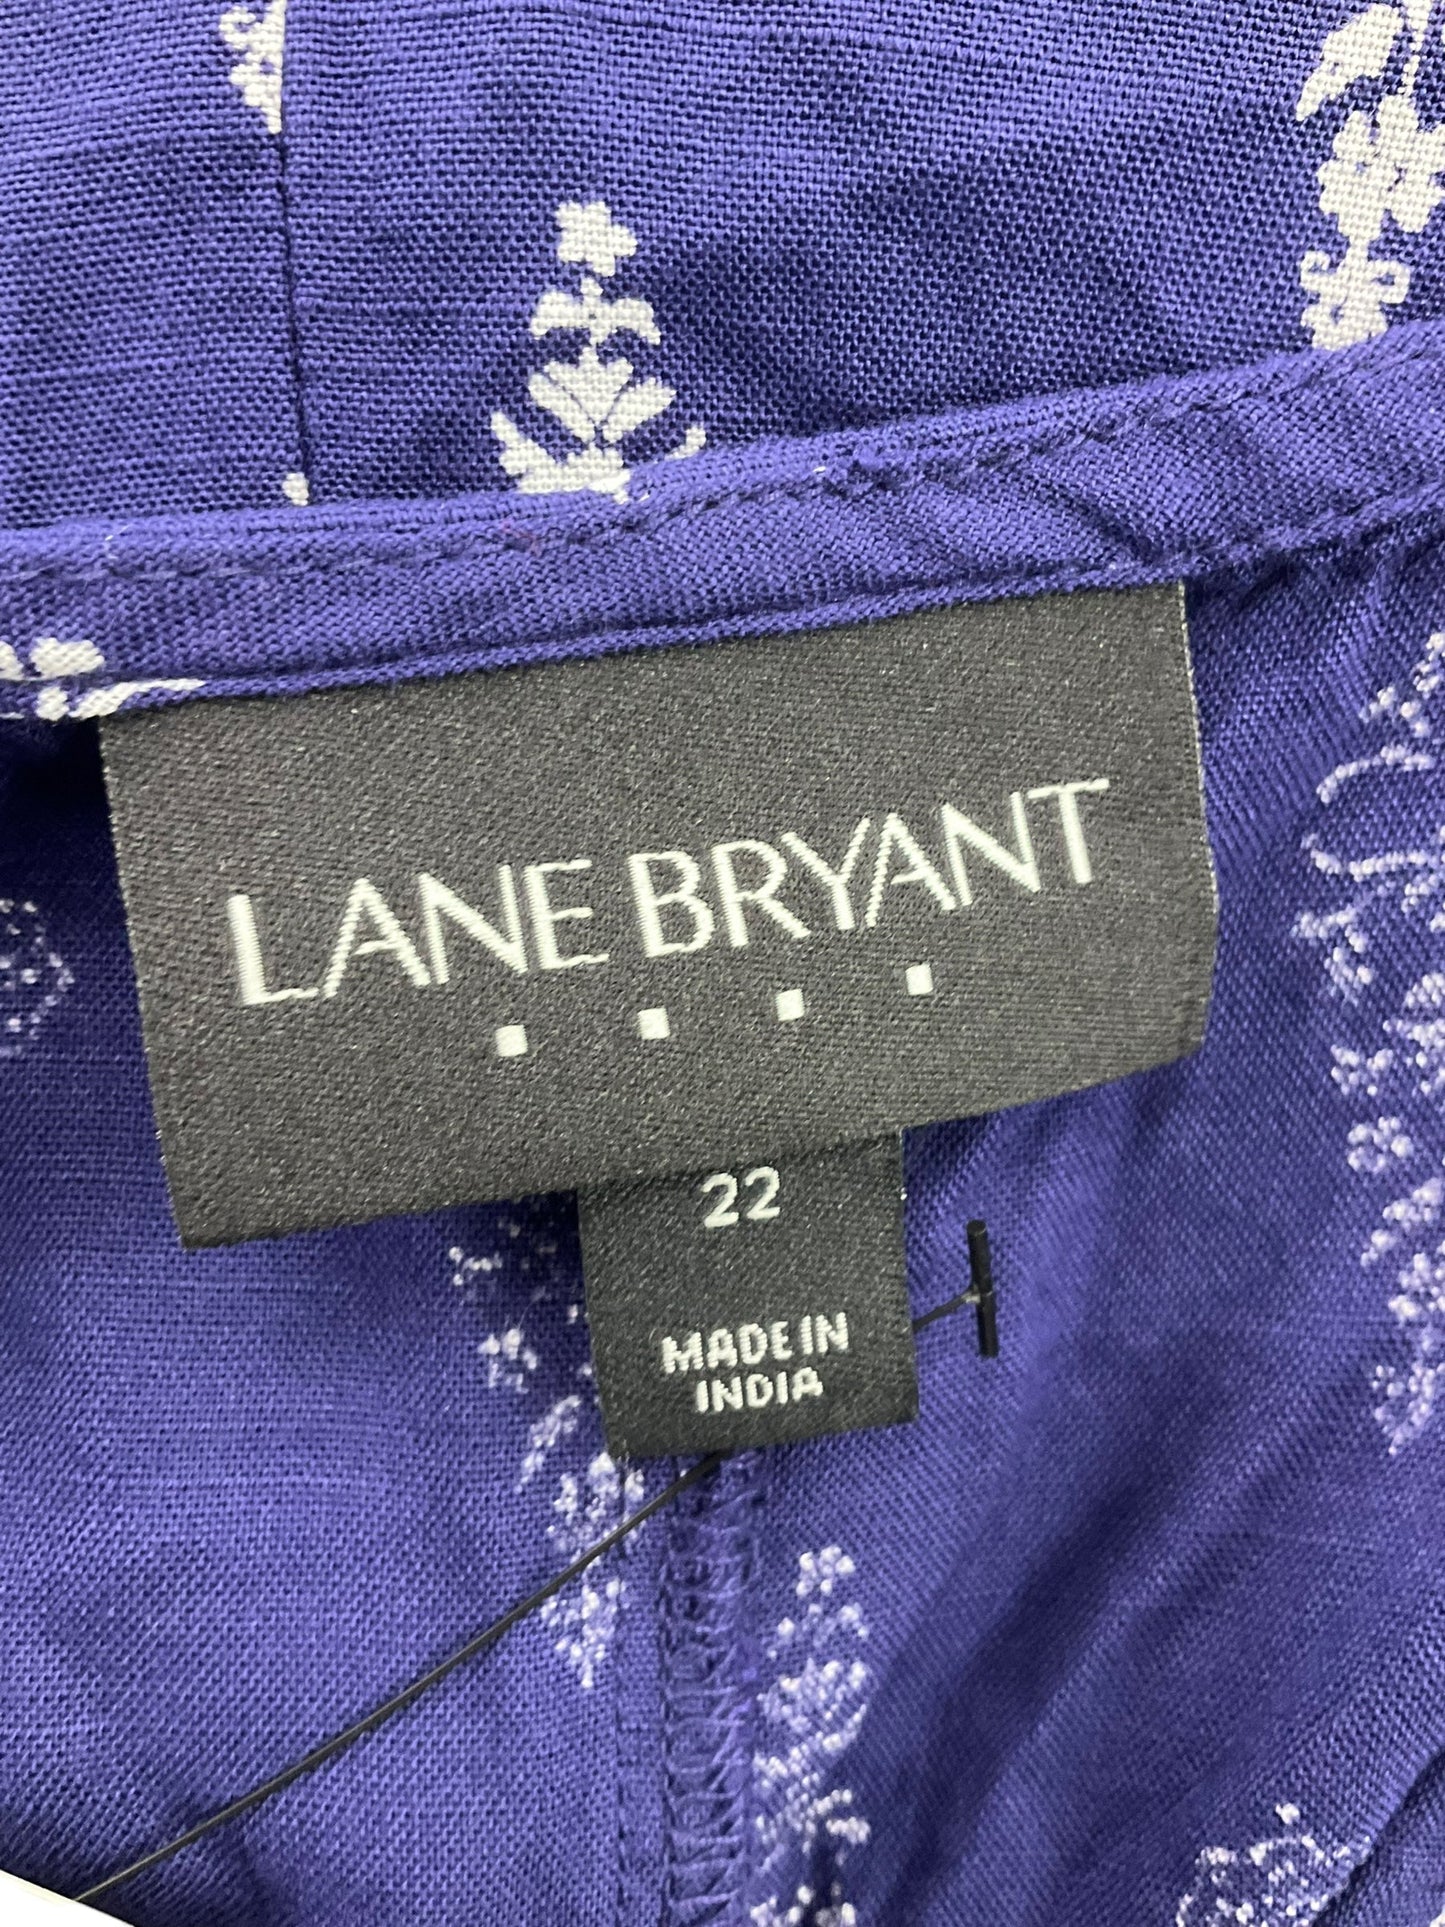 Blue & White Top Sleeveless Lane Bryant, Size 3x